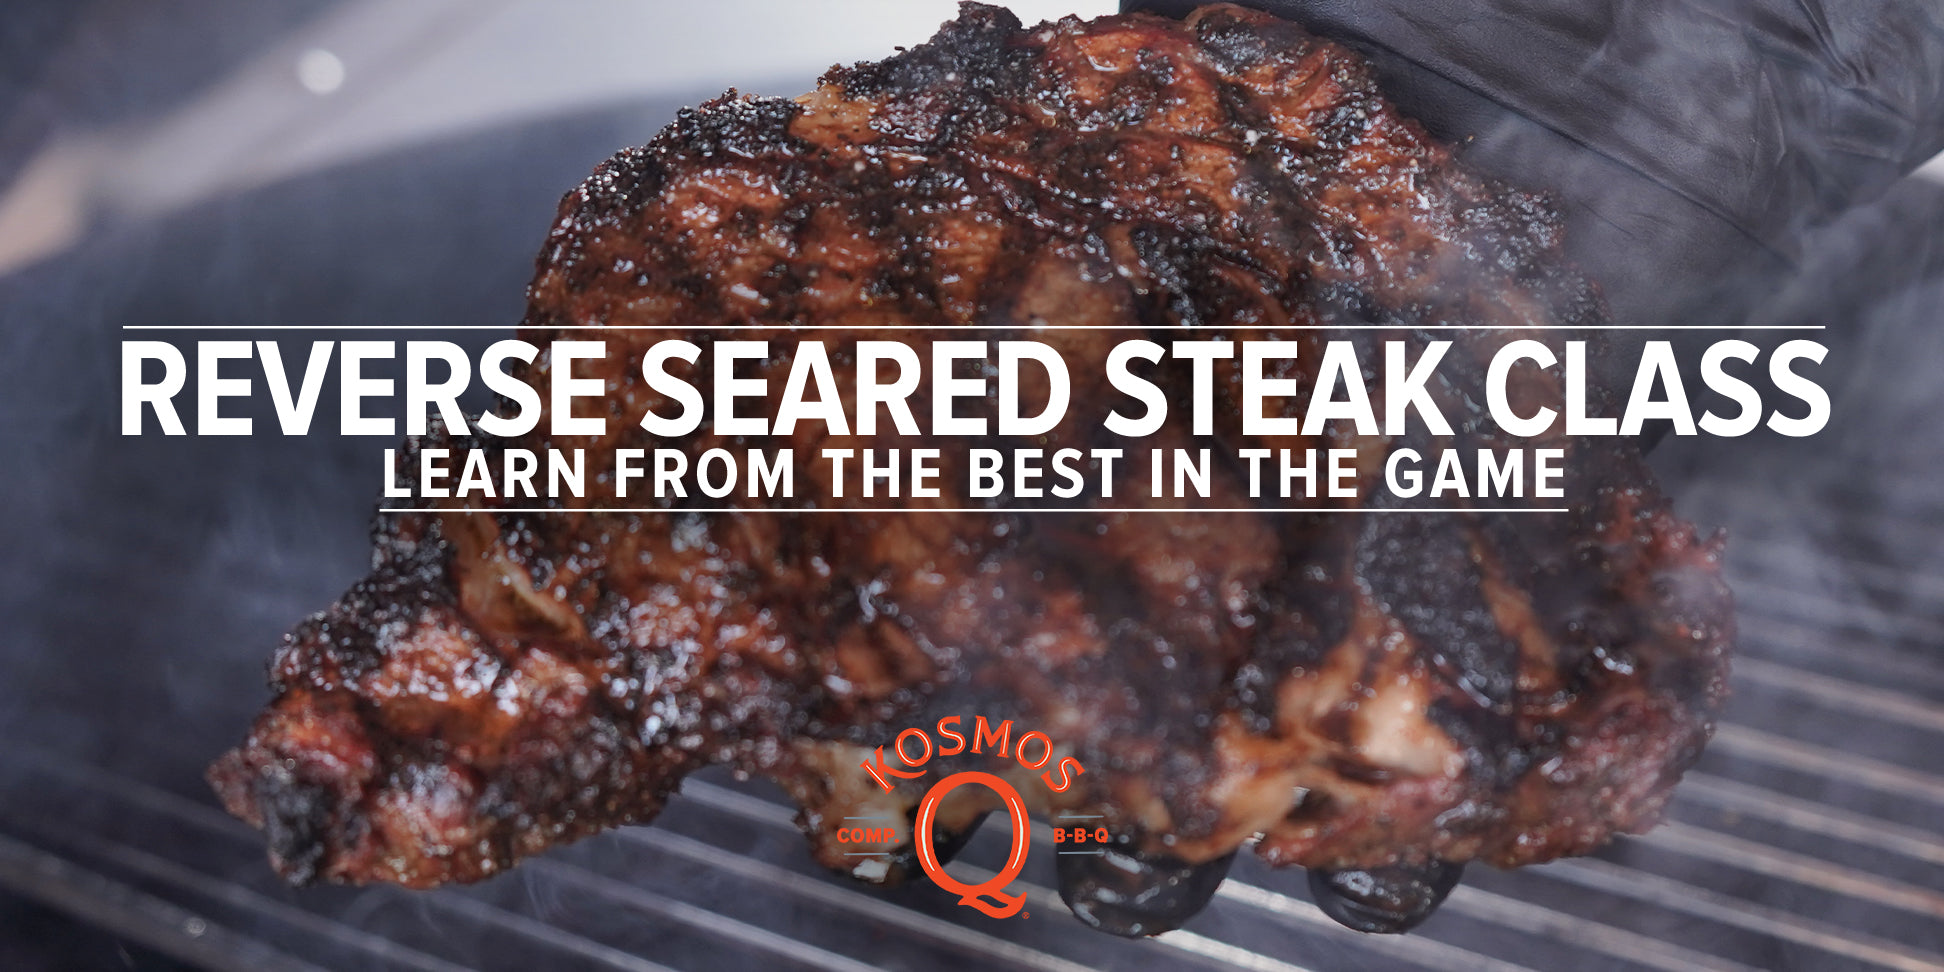 How To Reverse Sear a Steak Class!